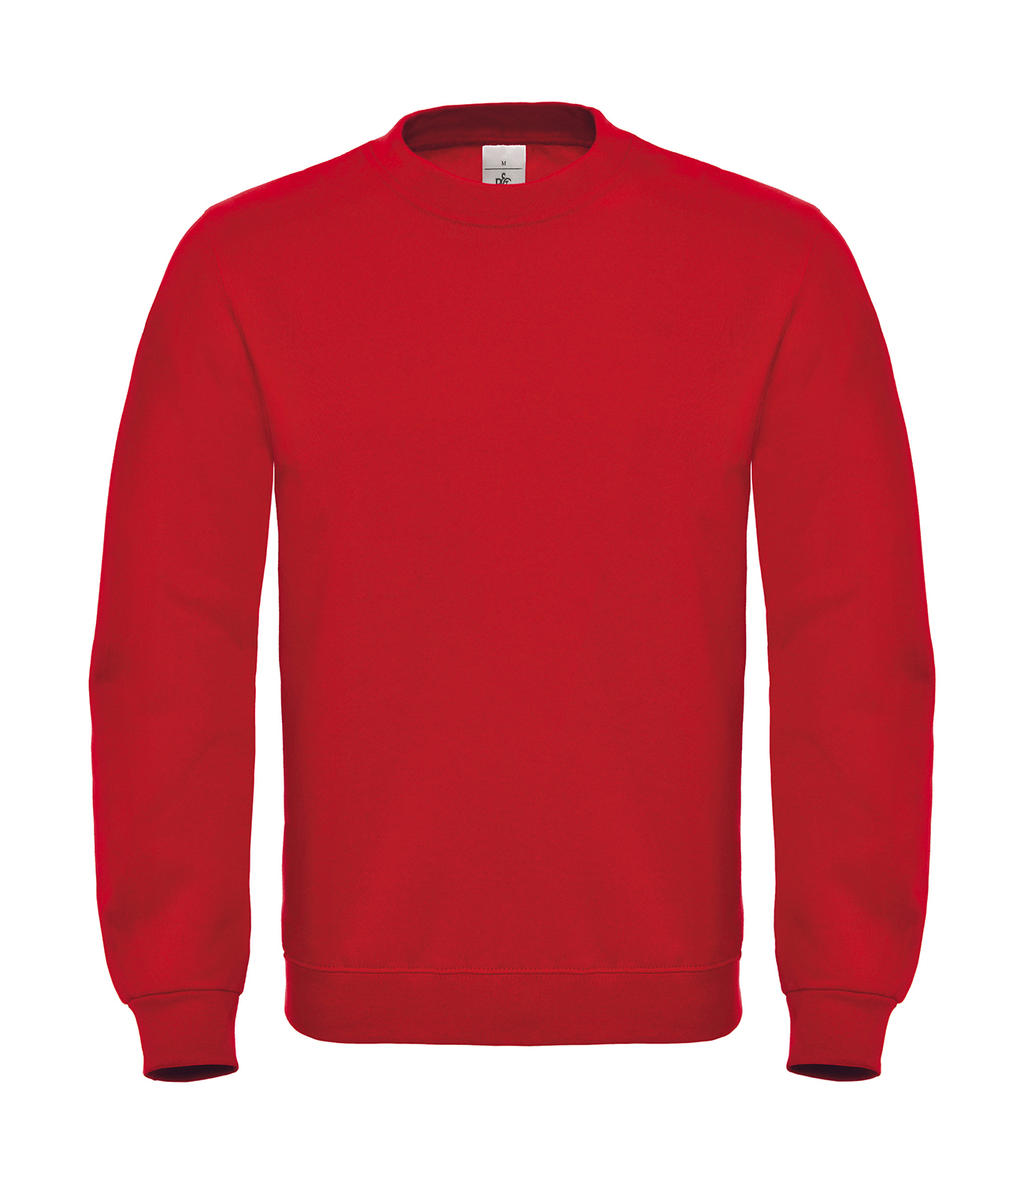  ID.002 Cotton Rich Sweatshirt  in Farbe Red